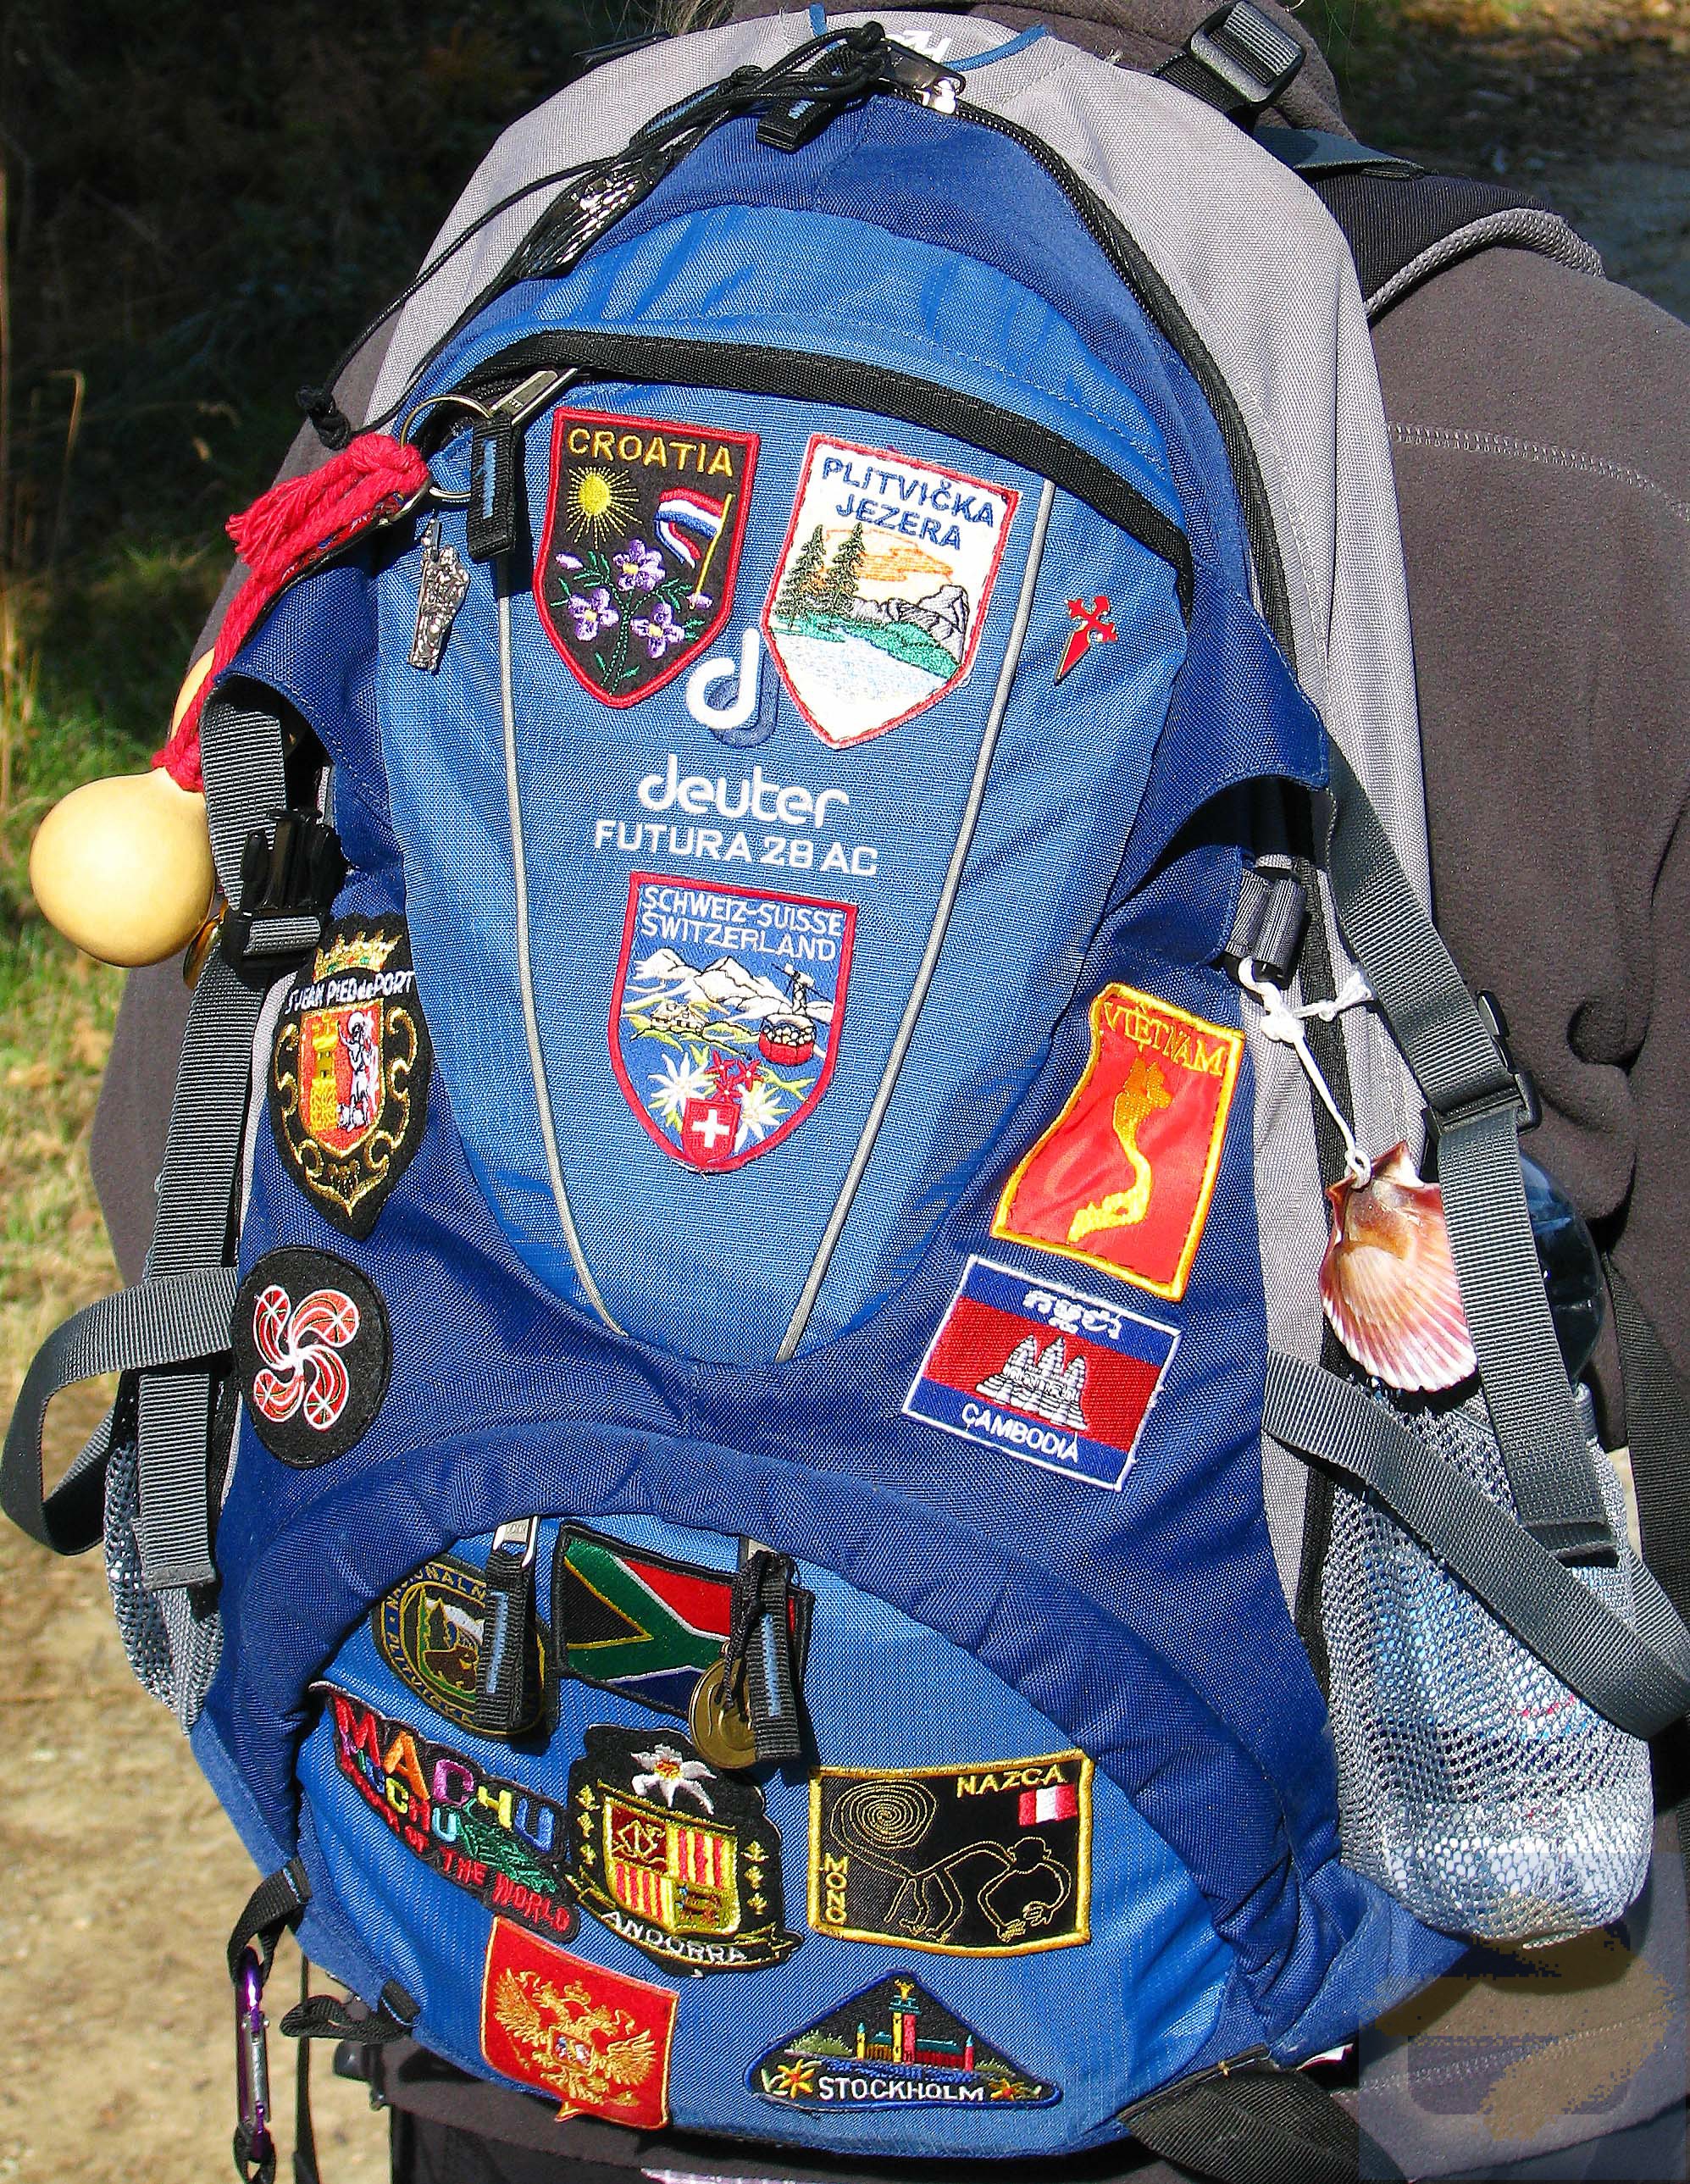 Beautiful backpack at Trabadelo - La Portela de Valcarse section